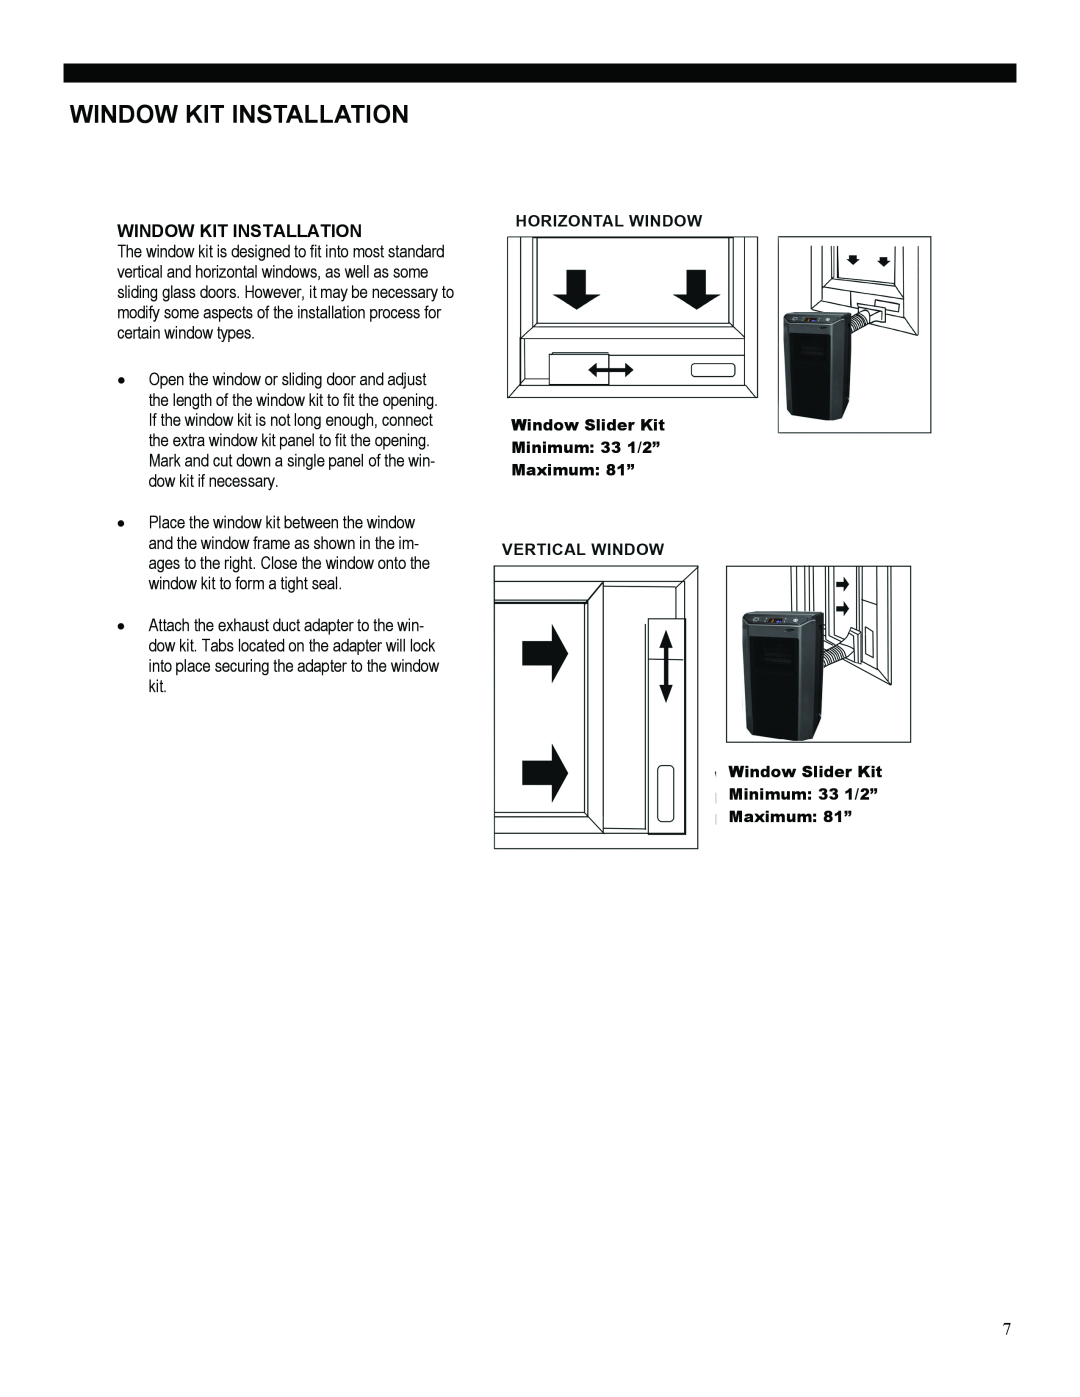 Soleus Air 3046364, PA1-10R-32 manual Window Kit Installation 